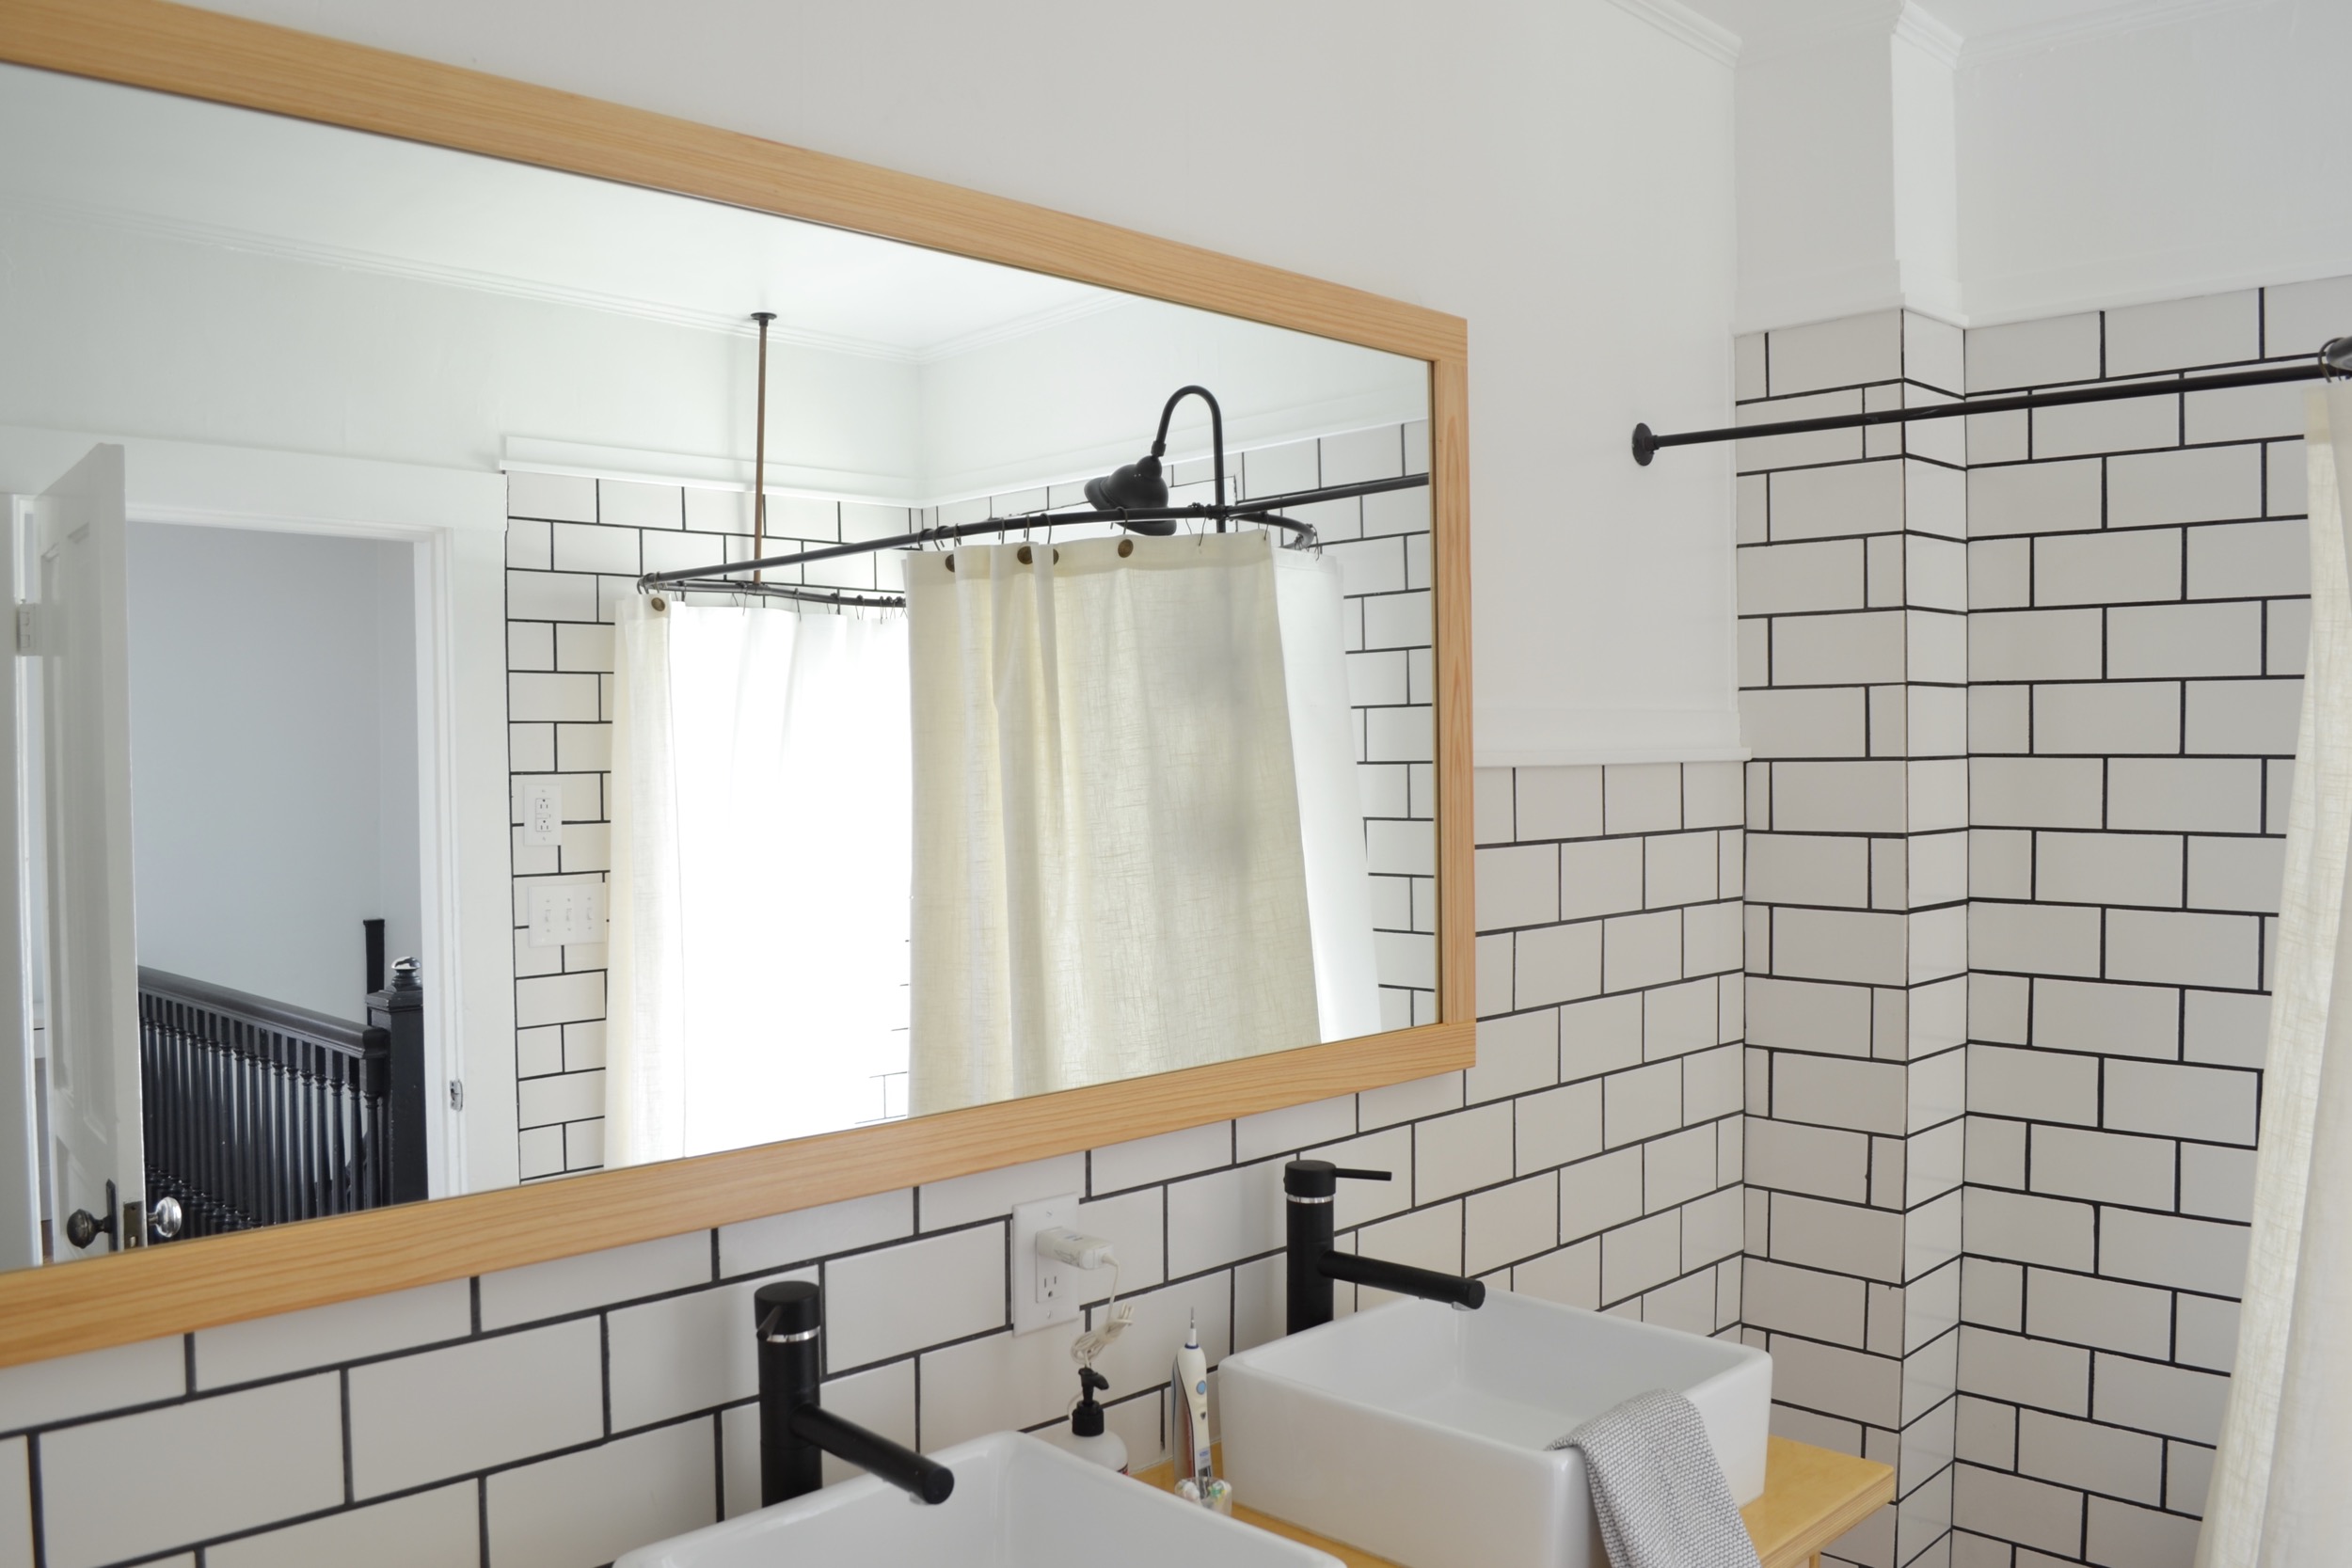 Bathroom-mirror-frame-idea4.jpg